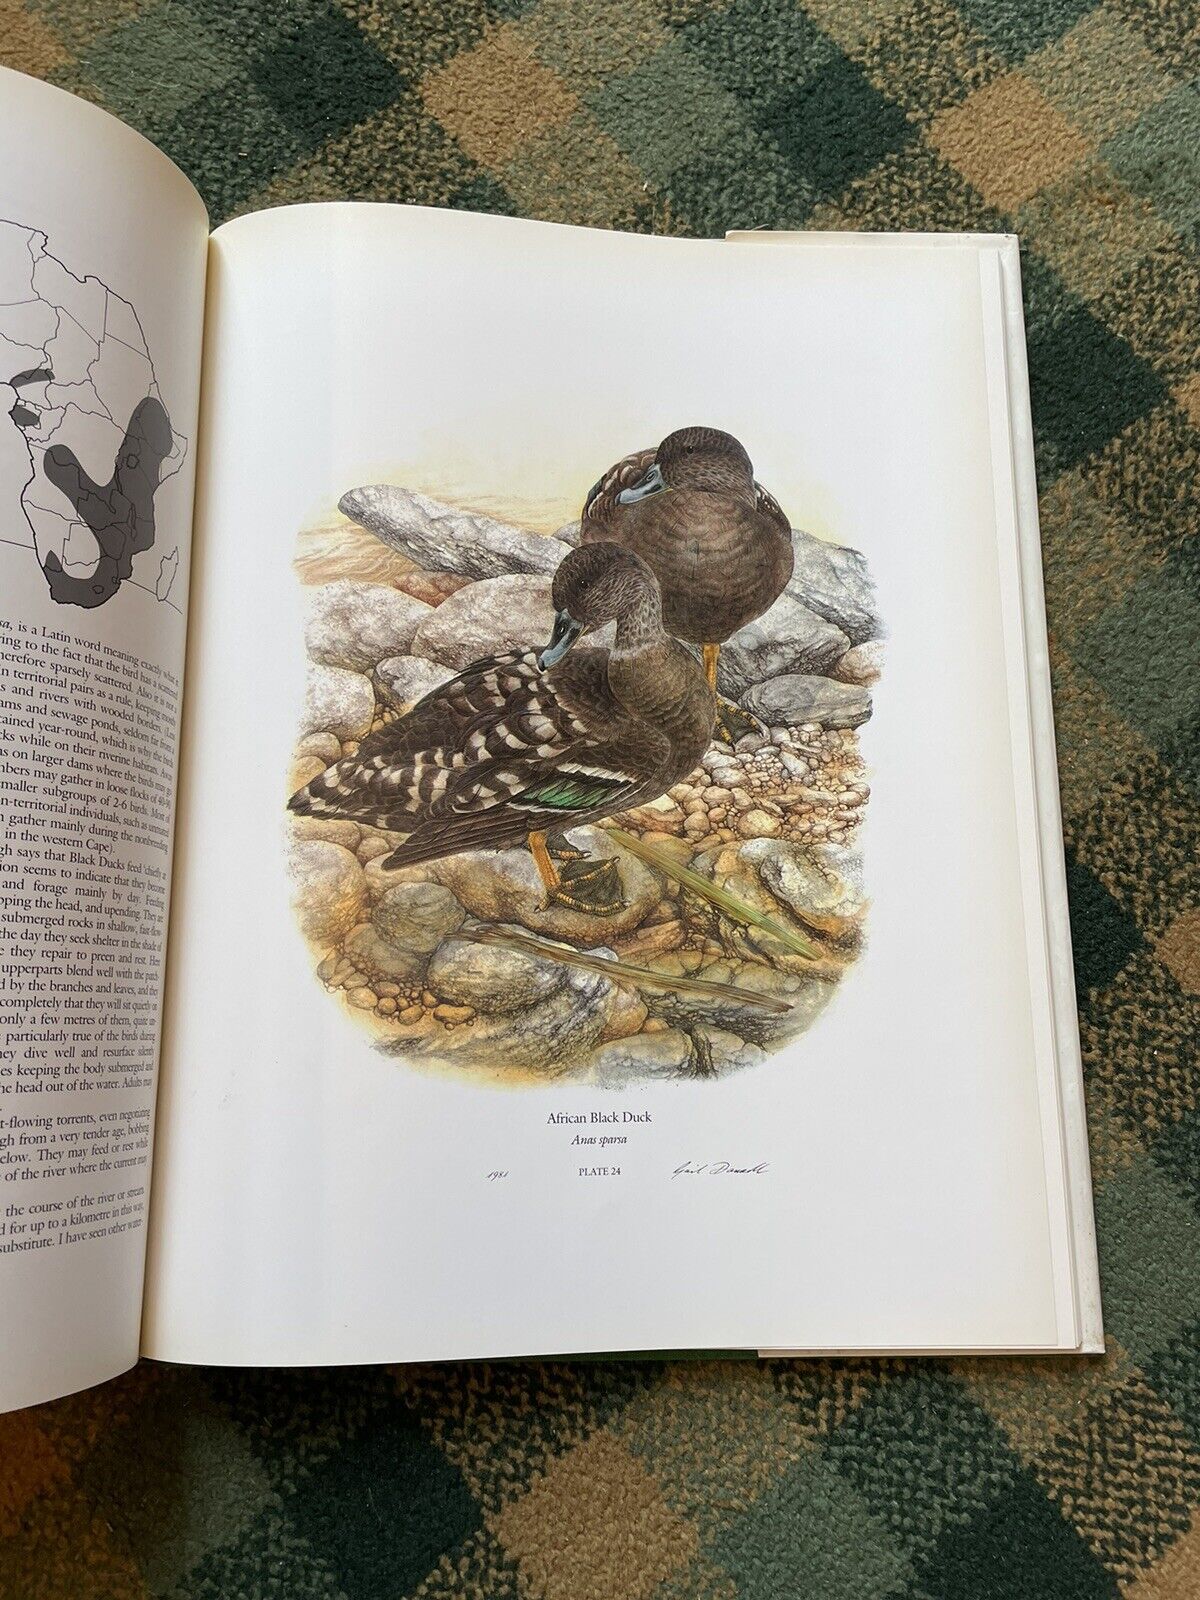 Maclean & Darroll's Ducks of Sub-Saharan Africa : Ltd Ed Folio : Ornithology